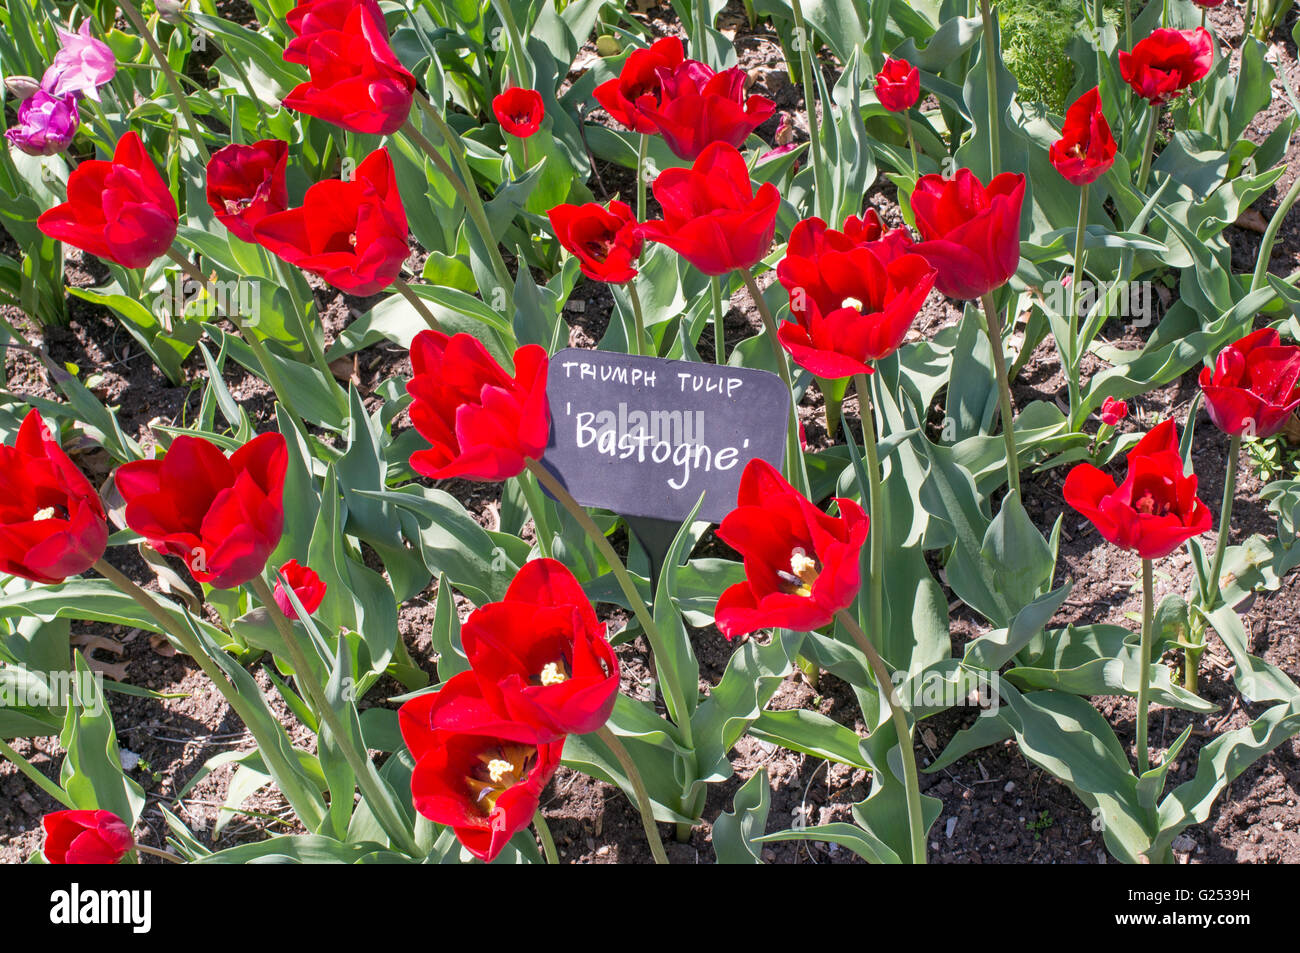 Trionfo rosso tulip Bastogne, Brooklyn Botanic Garden , New York, Stati Uniti d'America Foto Stock